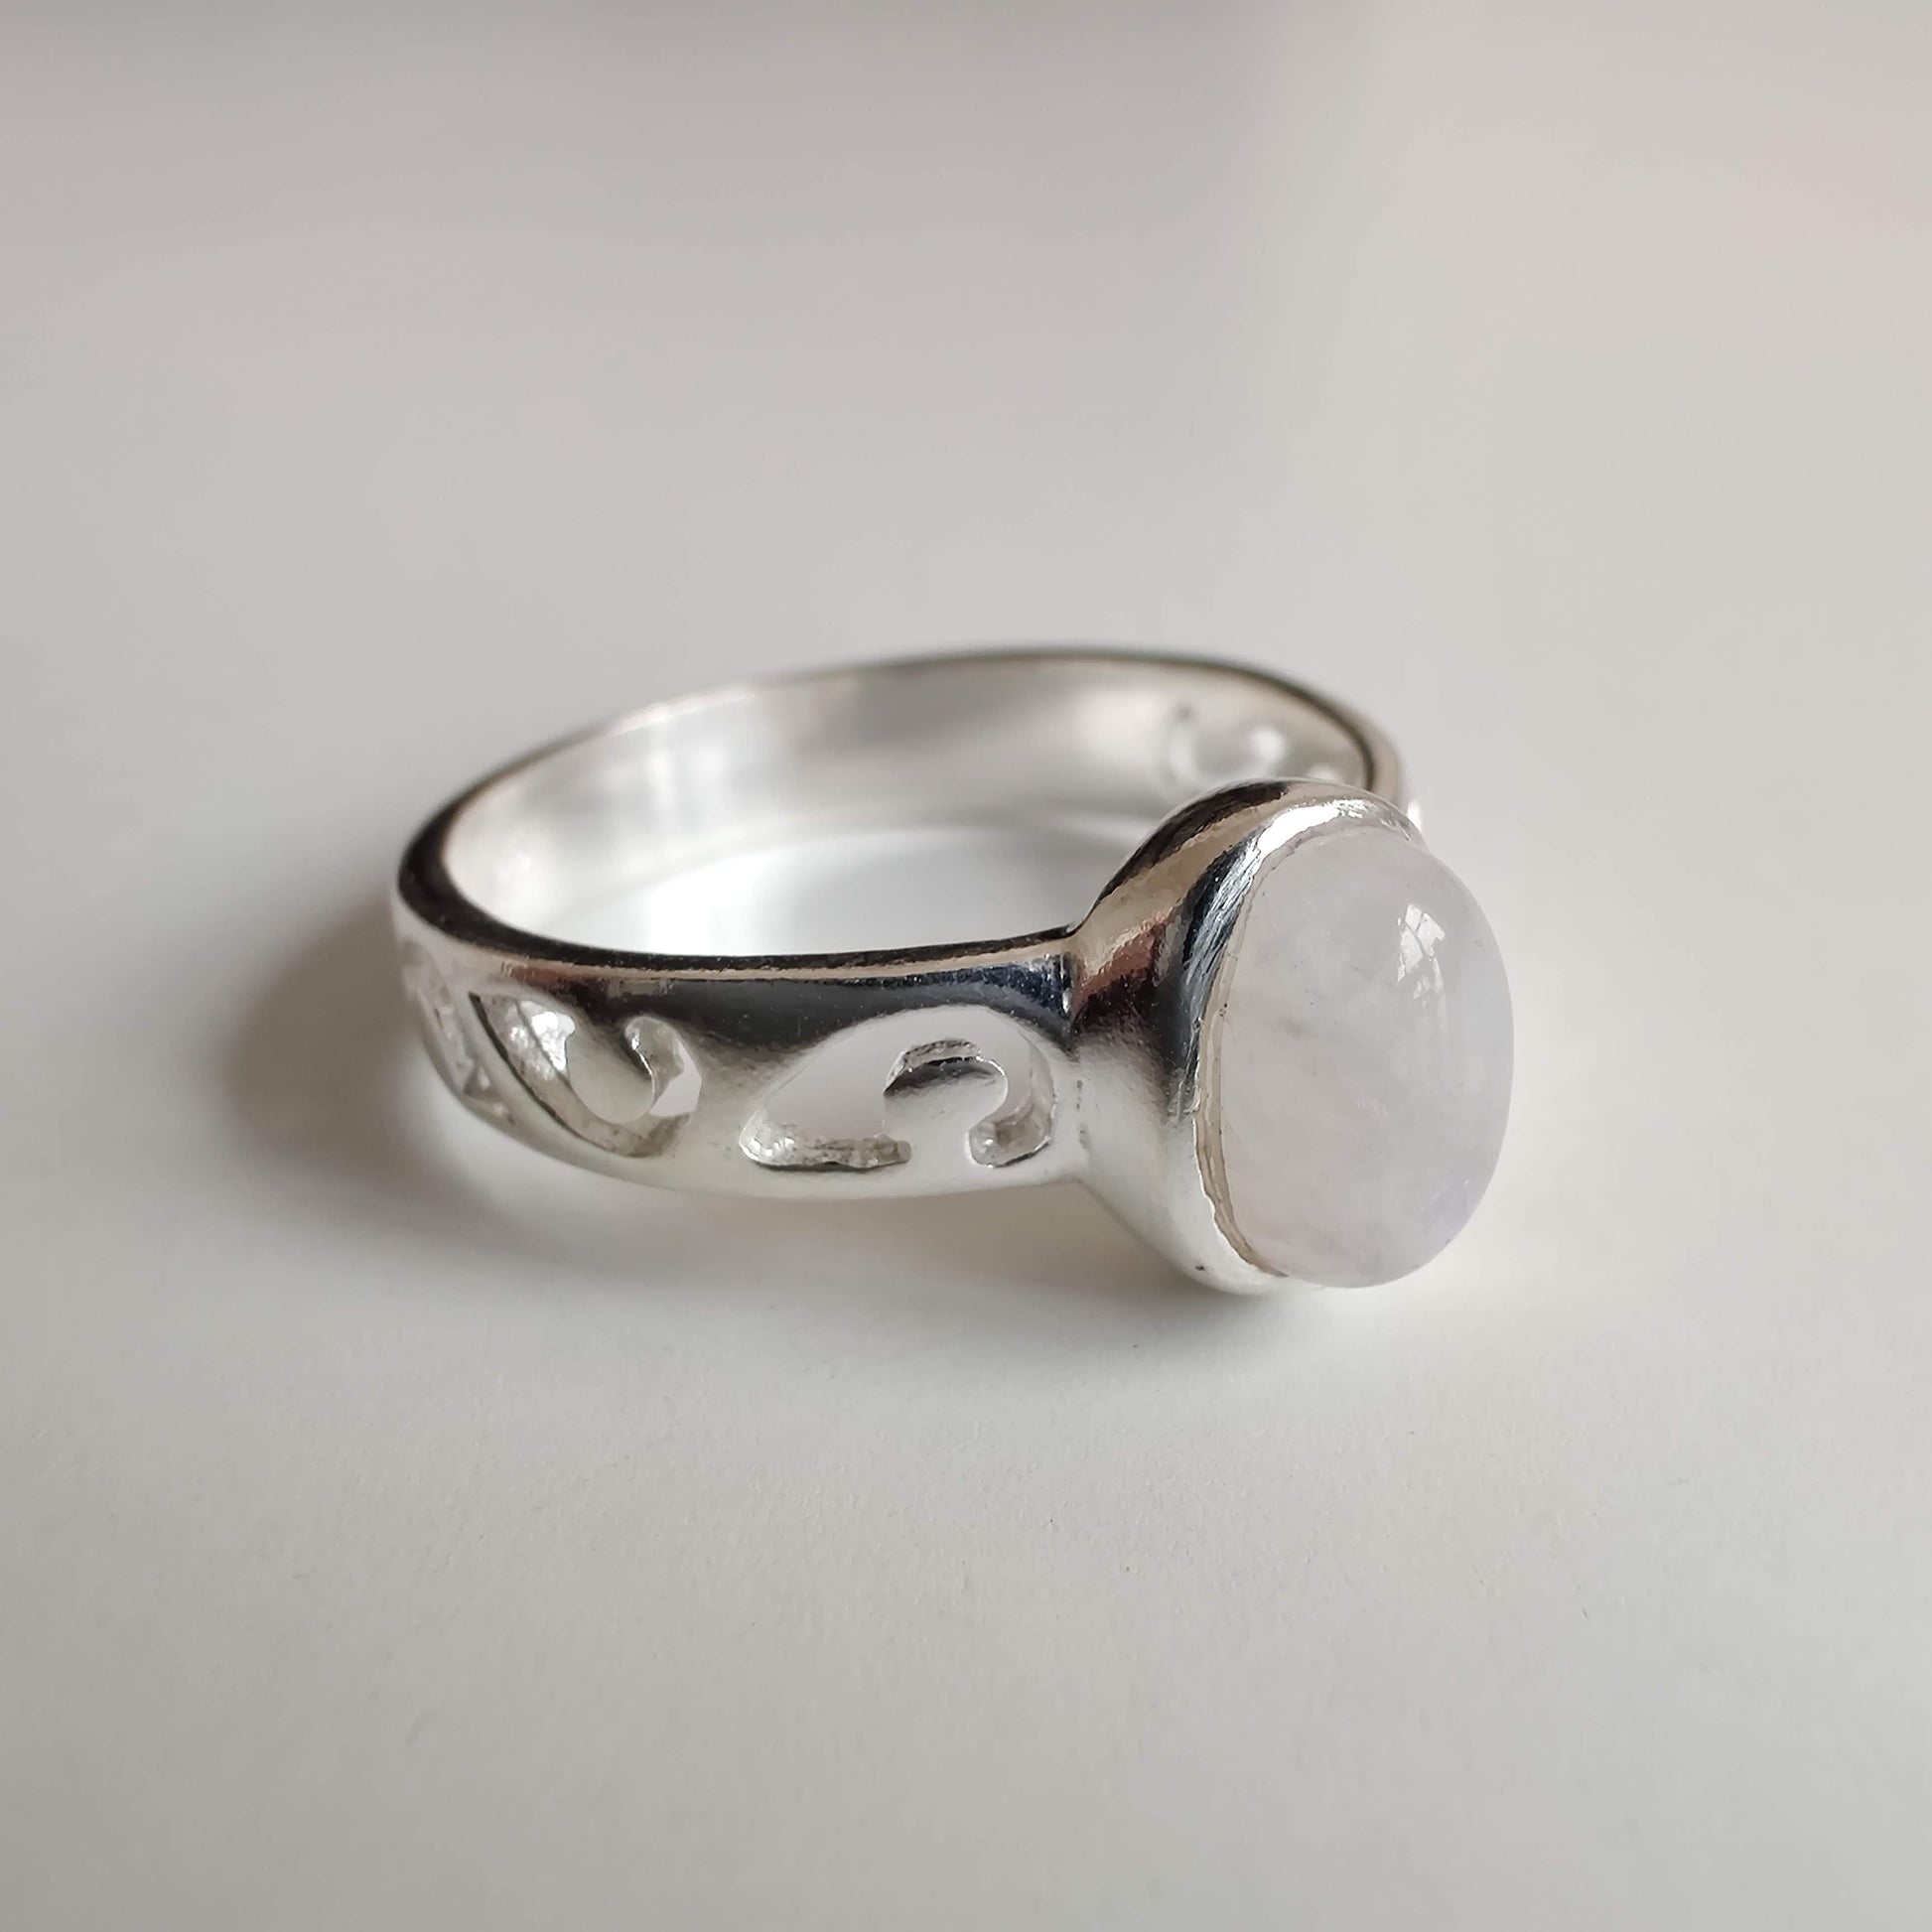 Moonstone Oval 925 Sterling Silver Ring with Koru Design - Rivendell Shop